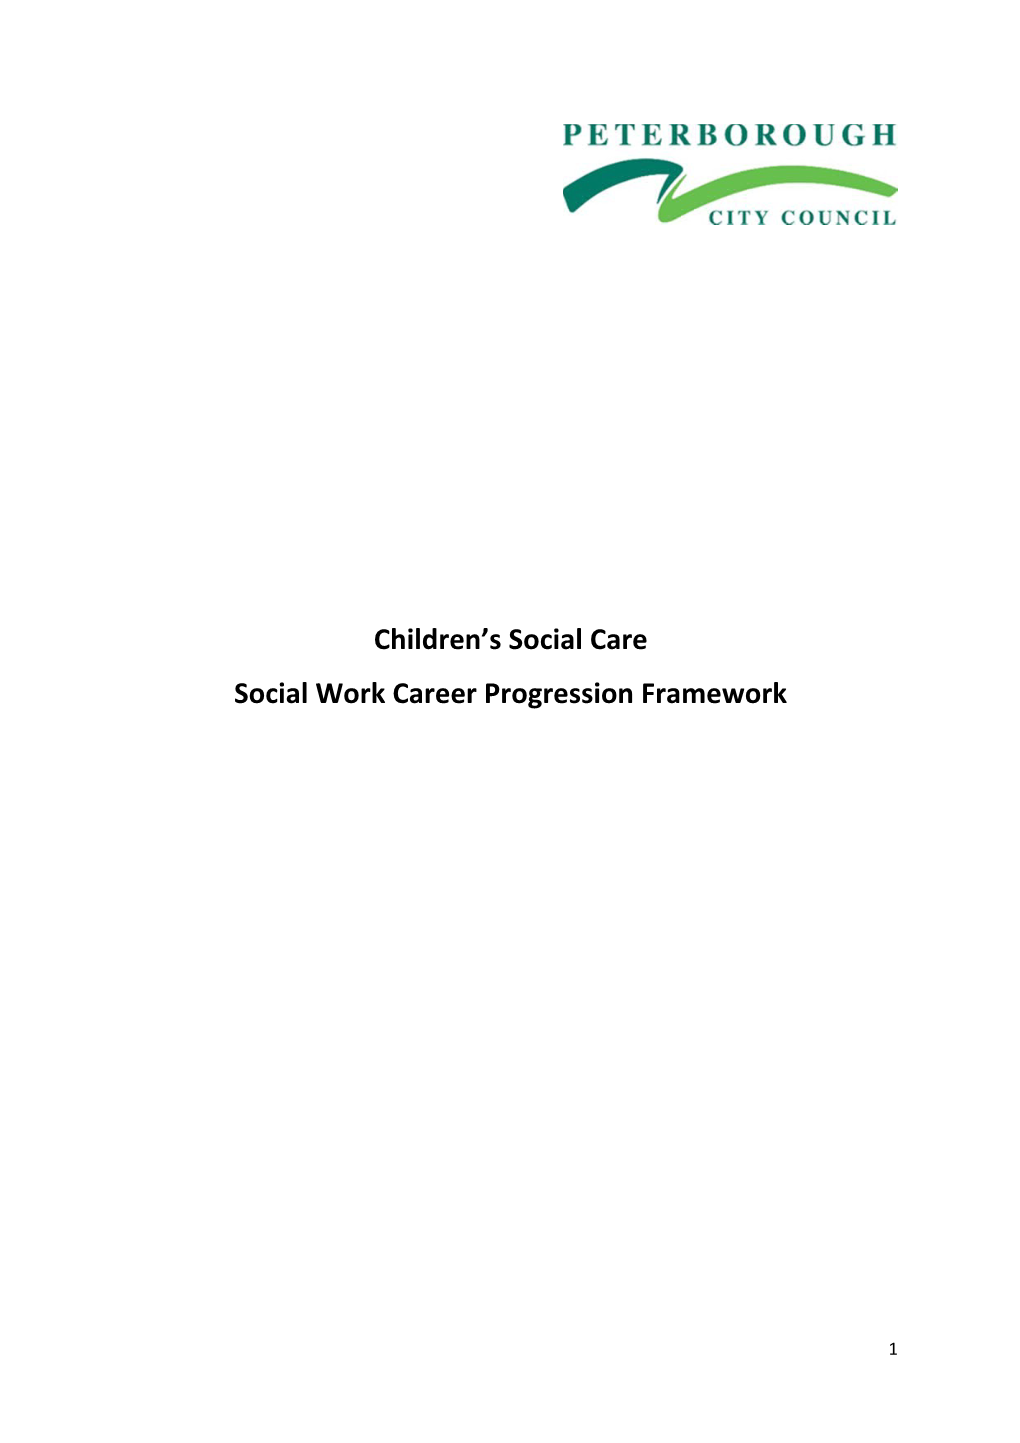 Social Work Career Progression Framework